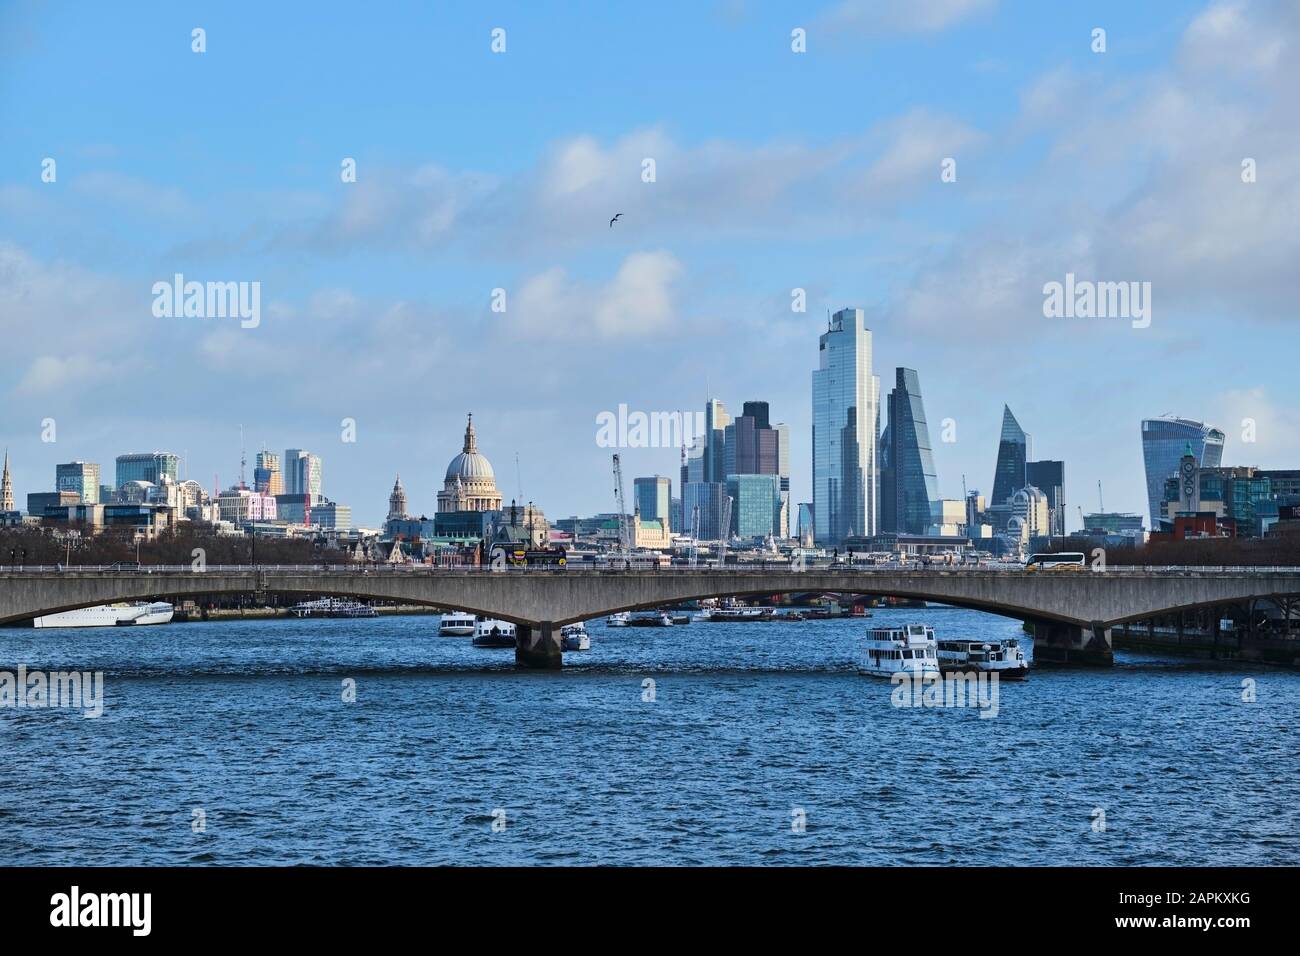 UK, England, London, Waterloo Bridge with city skyline in background Stock Photo